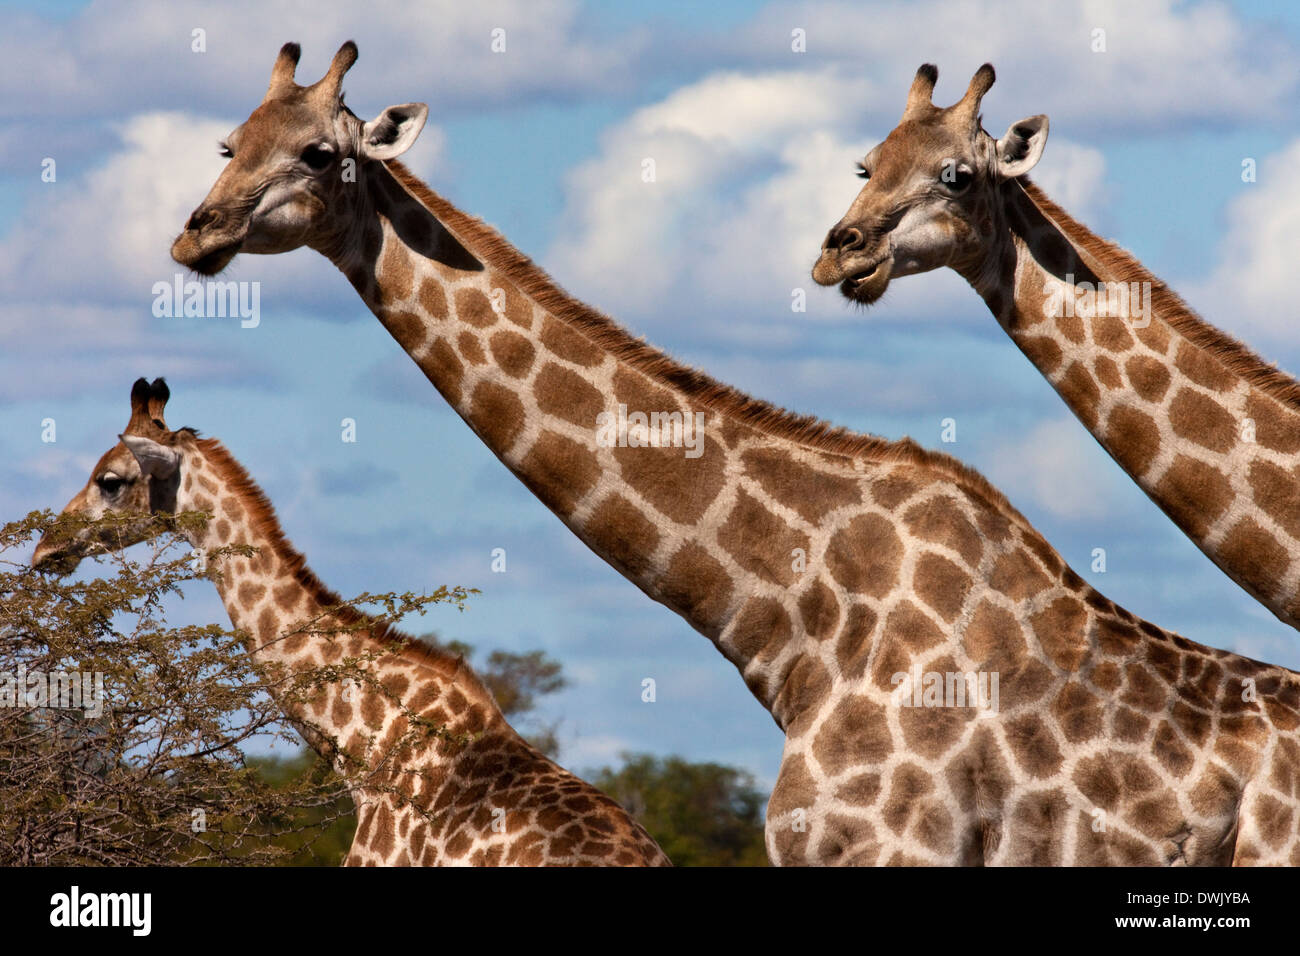 A group of Giraffe (Giraffa camelopardalis) in the Savuti region of Botswana Stock Photo